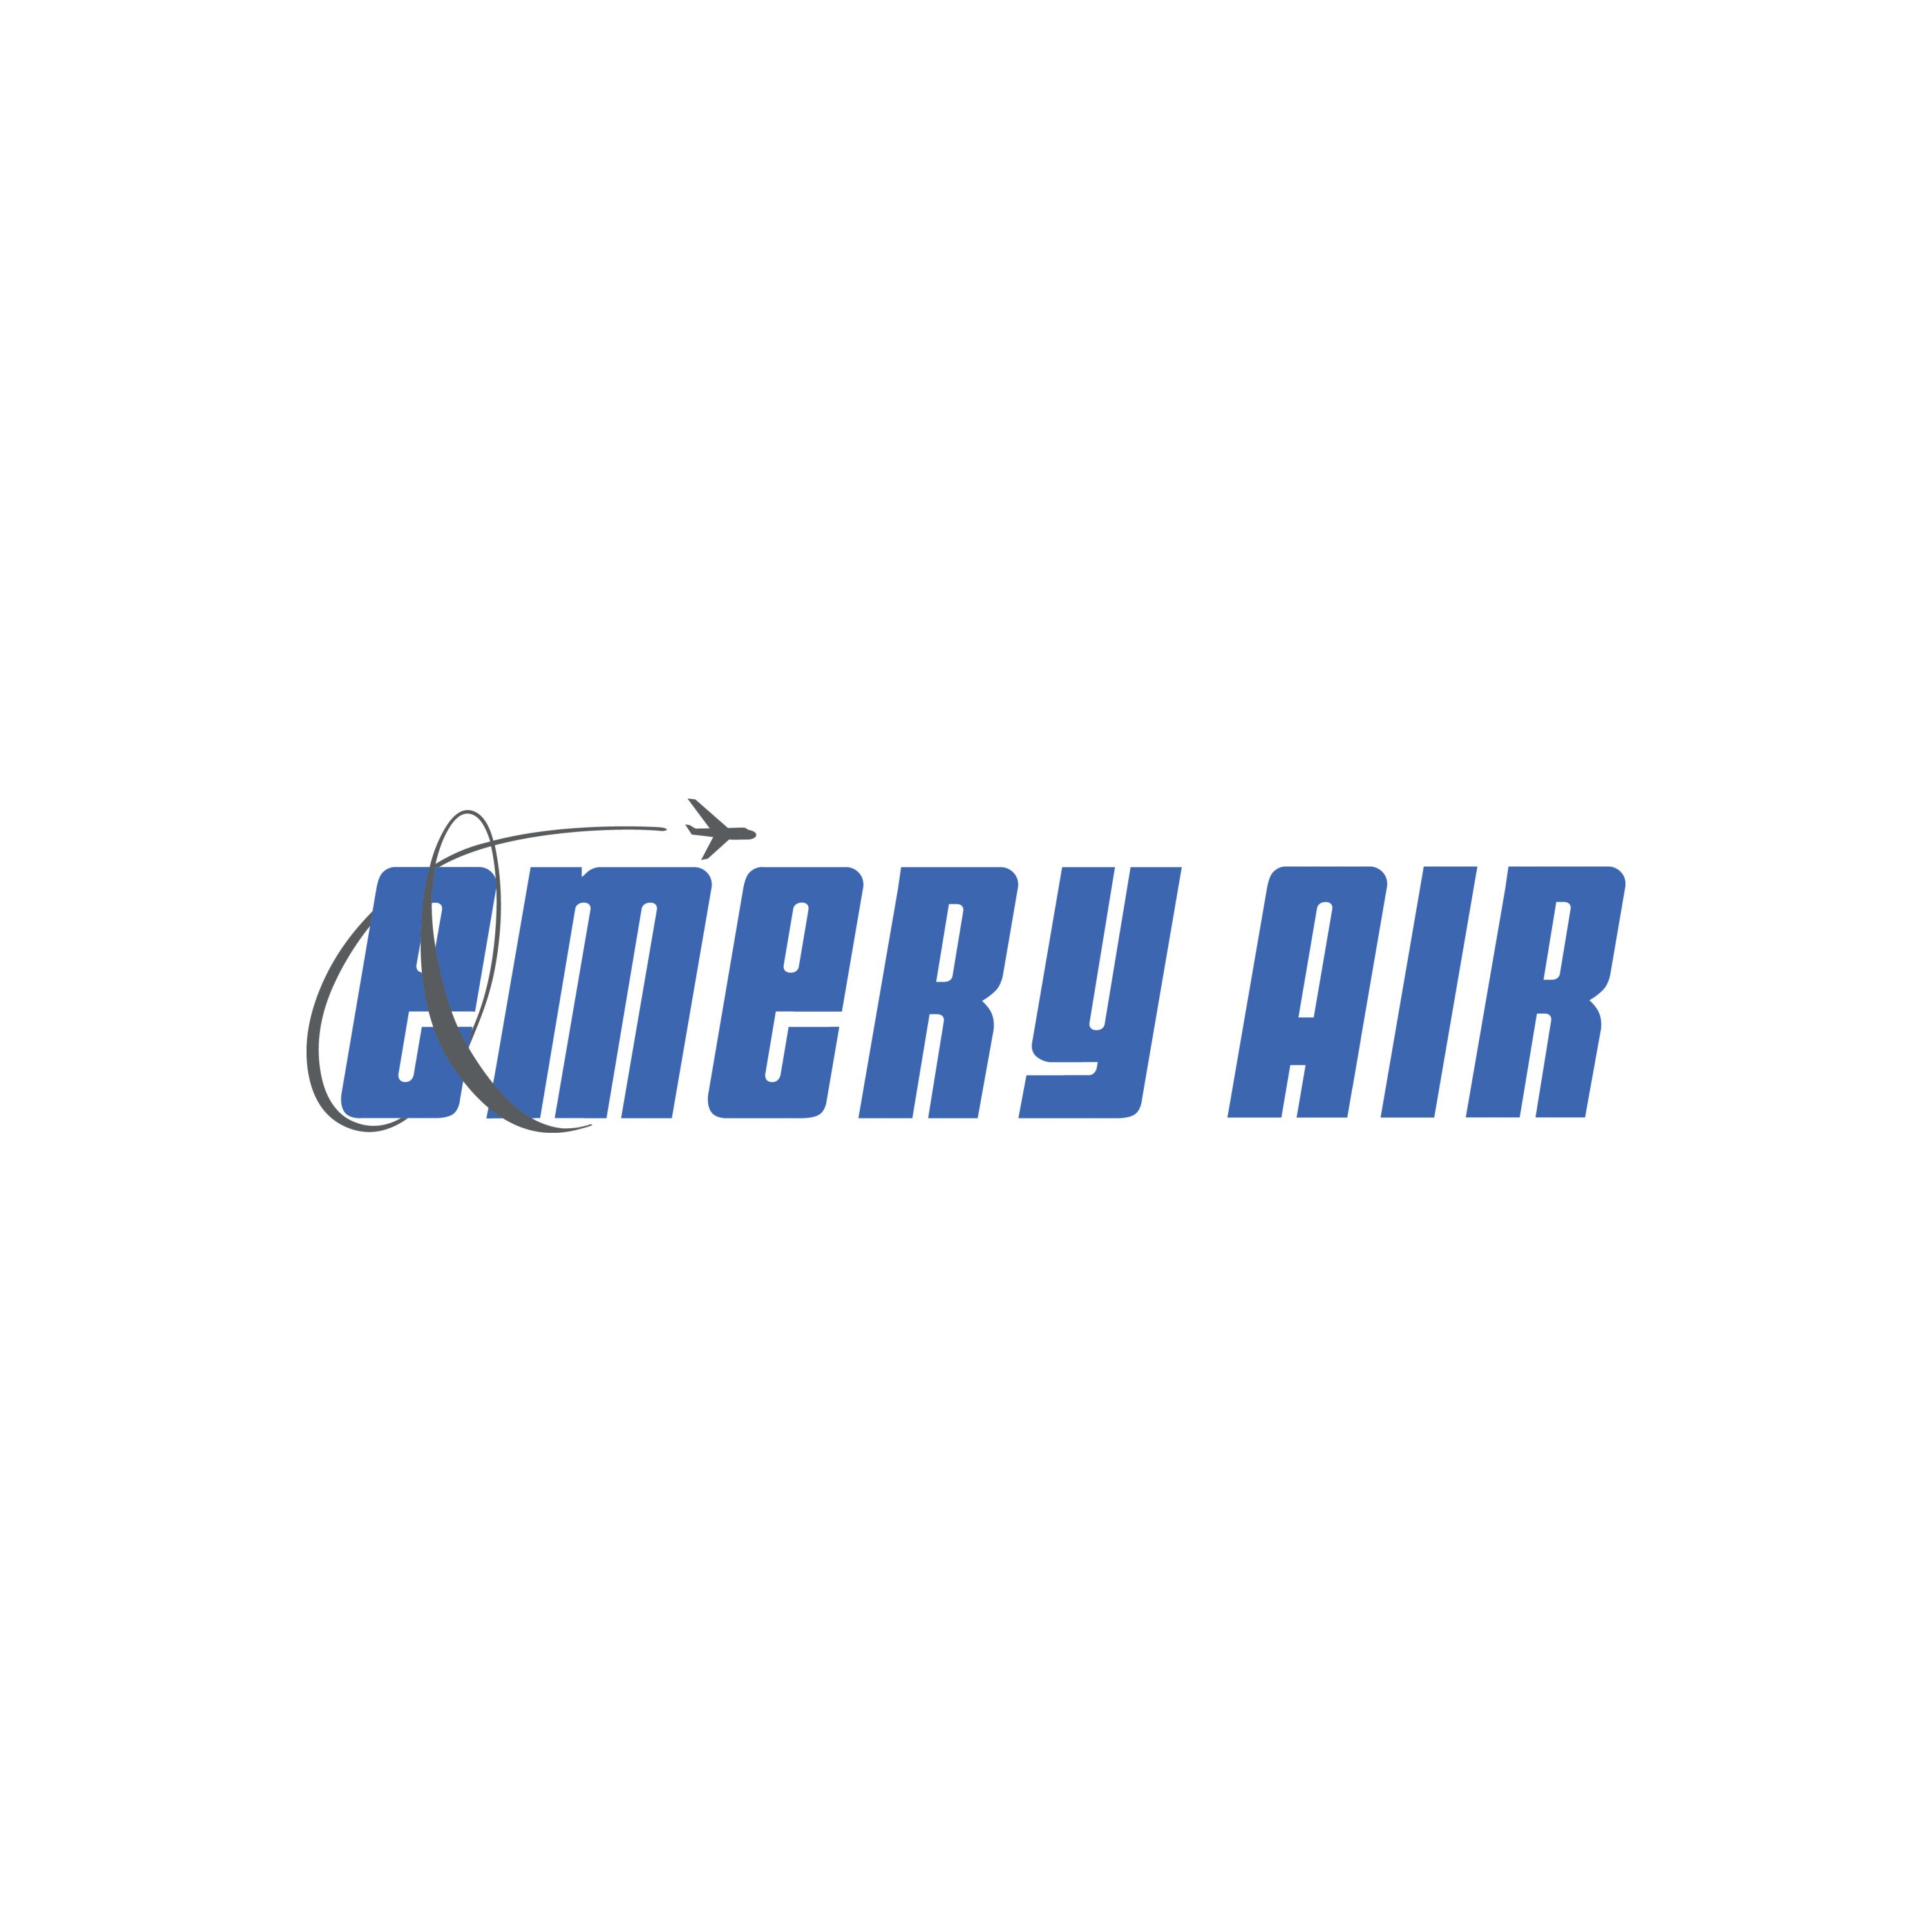 Emery Air implements CHAMP’s Cargospot Handling